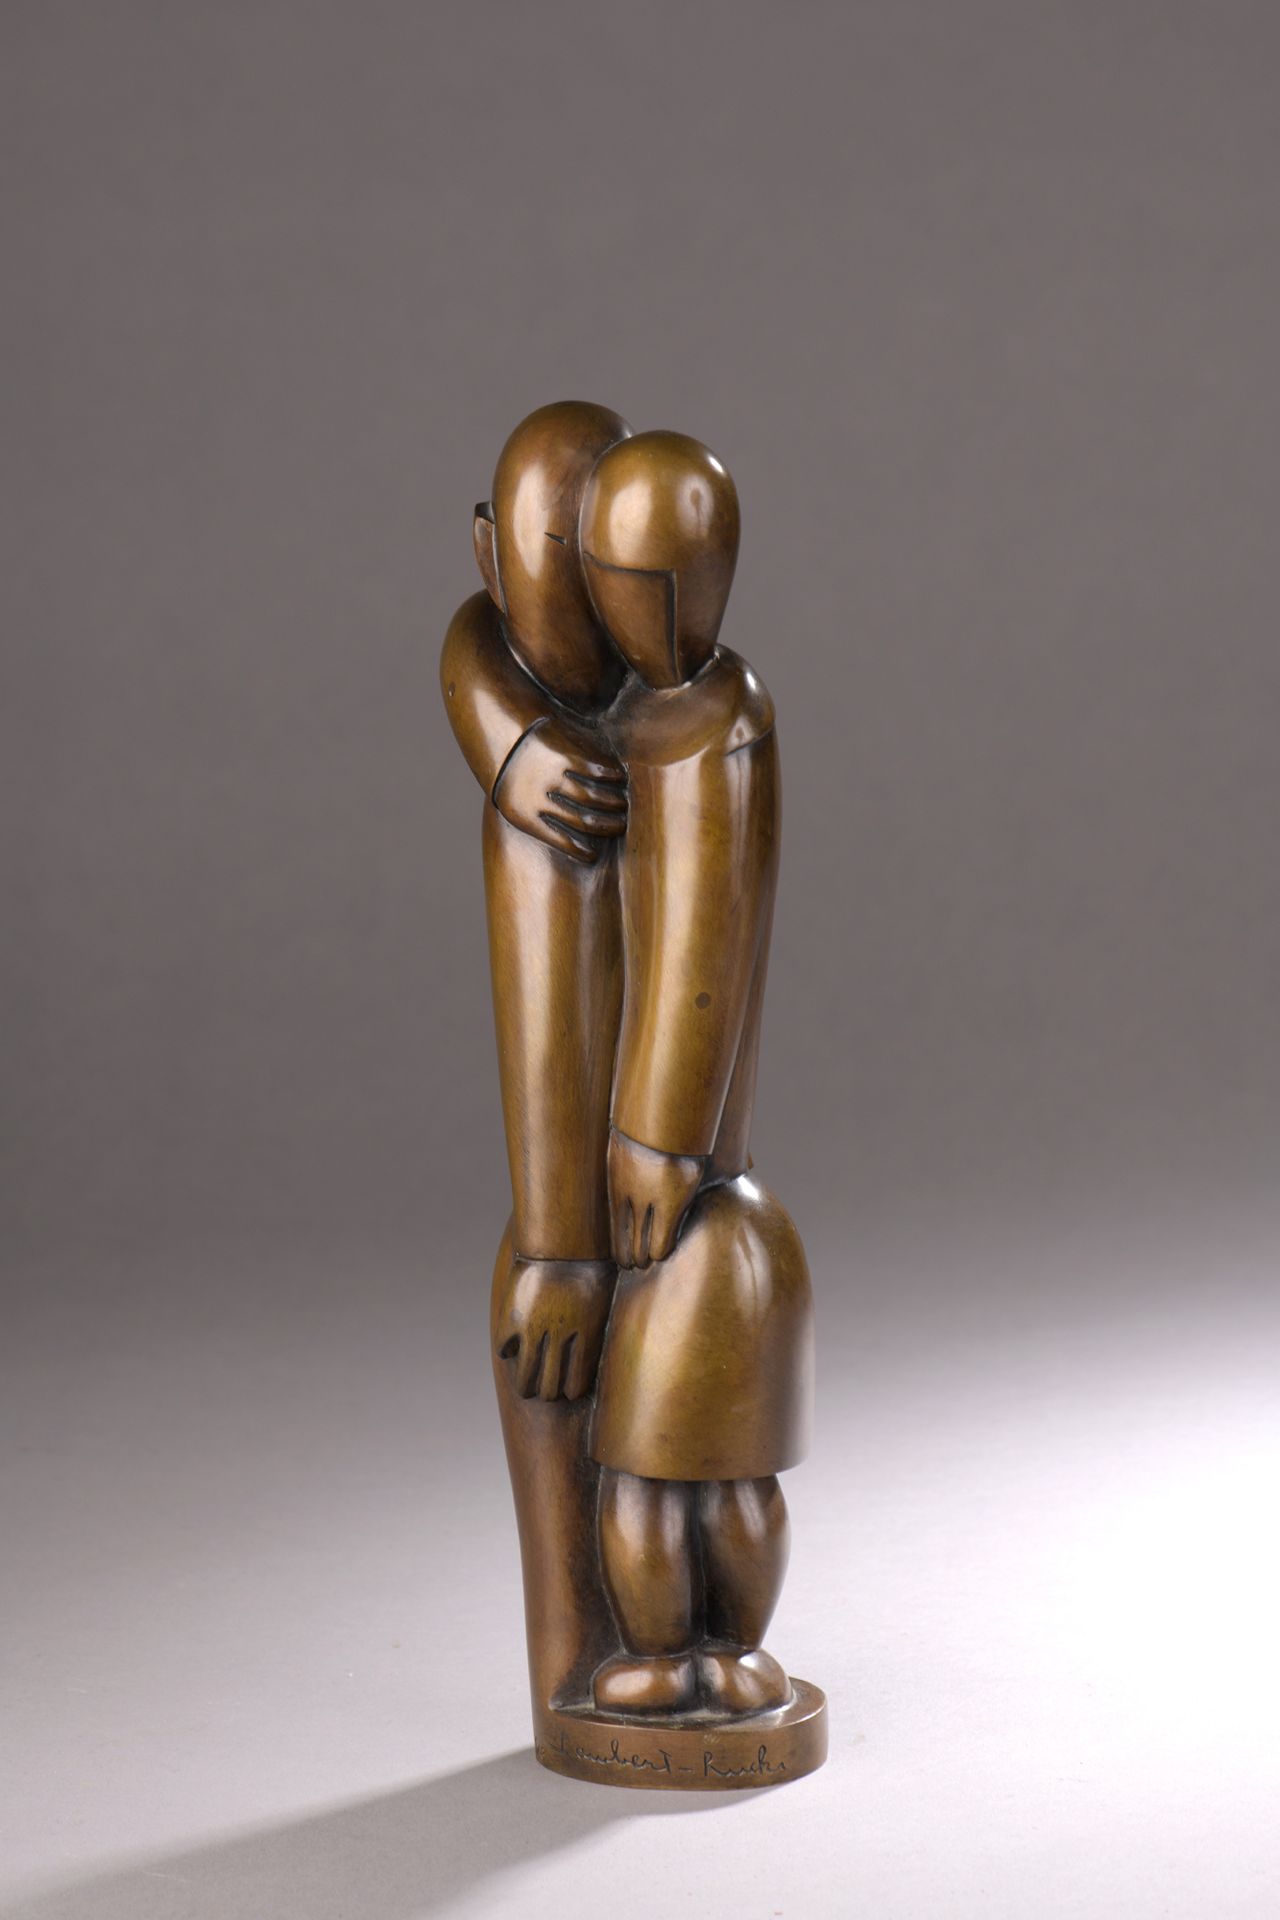 Null Jean LAMBERT-RUCKI (1888-1967)

Gli amanti, 1923

Prova in bronzo dorato co&hellip;